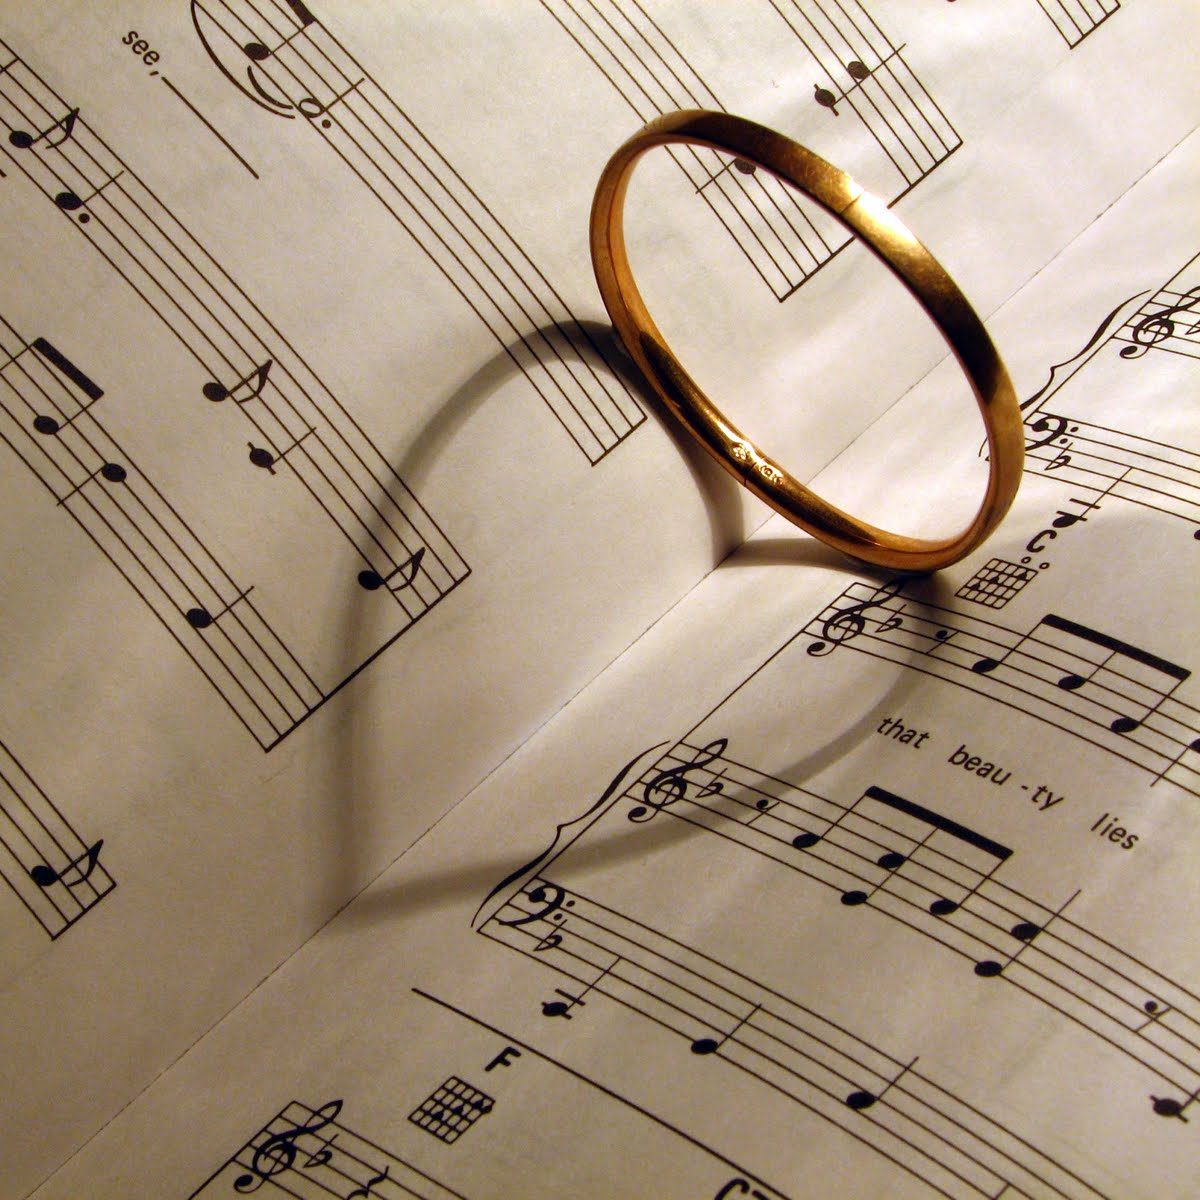 Wedding ring making heart shaped shadow on sheet music.